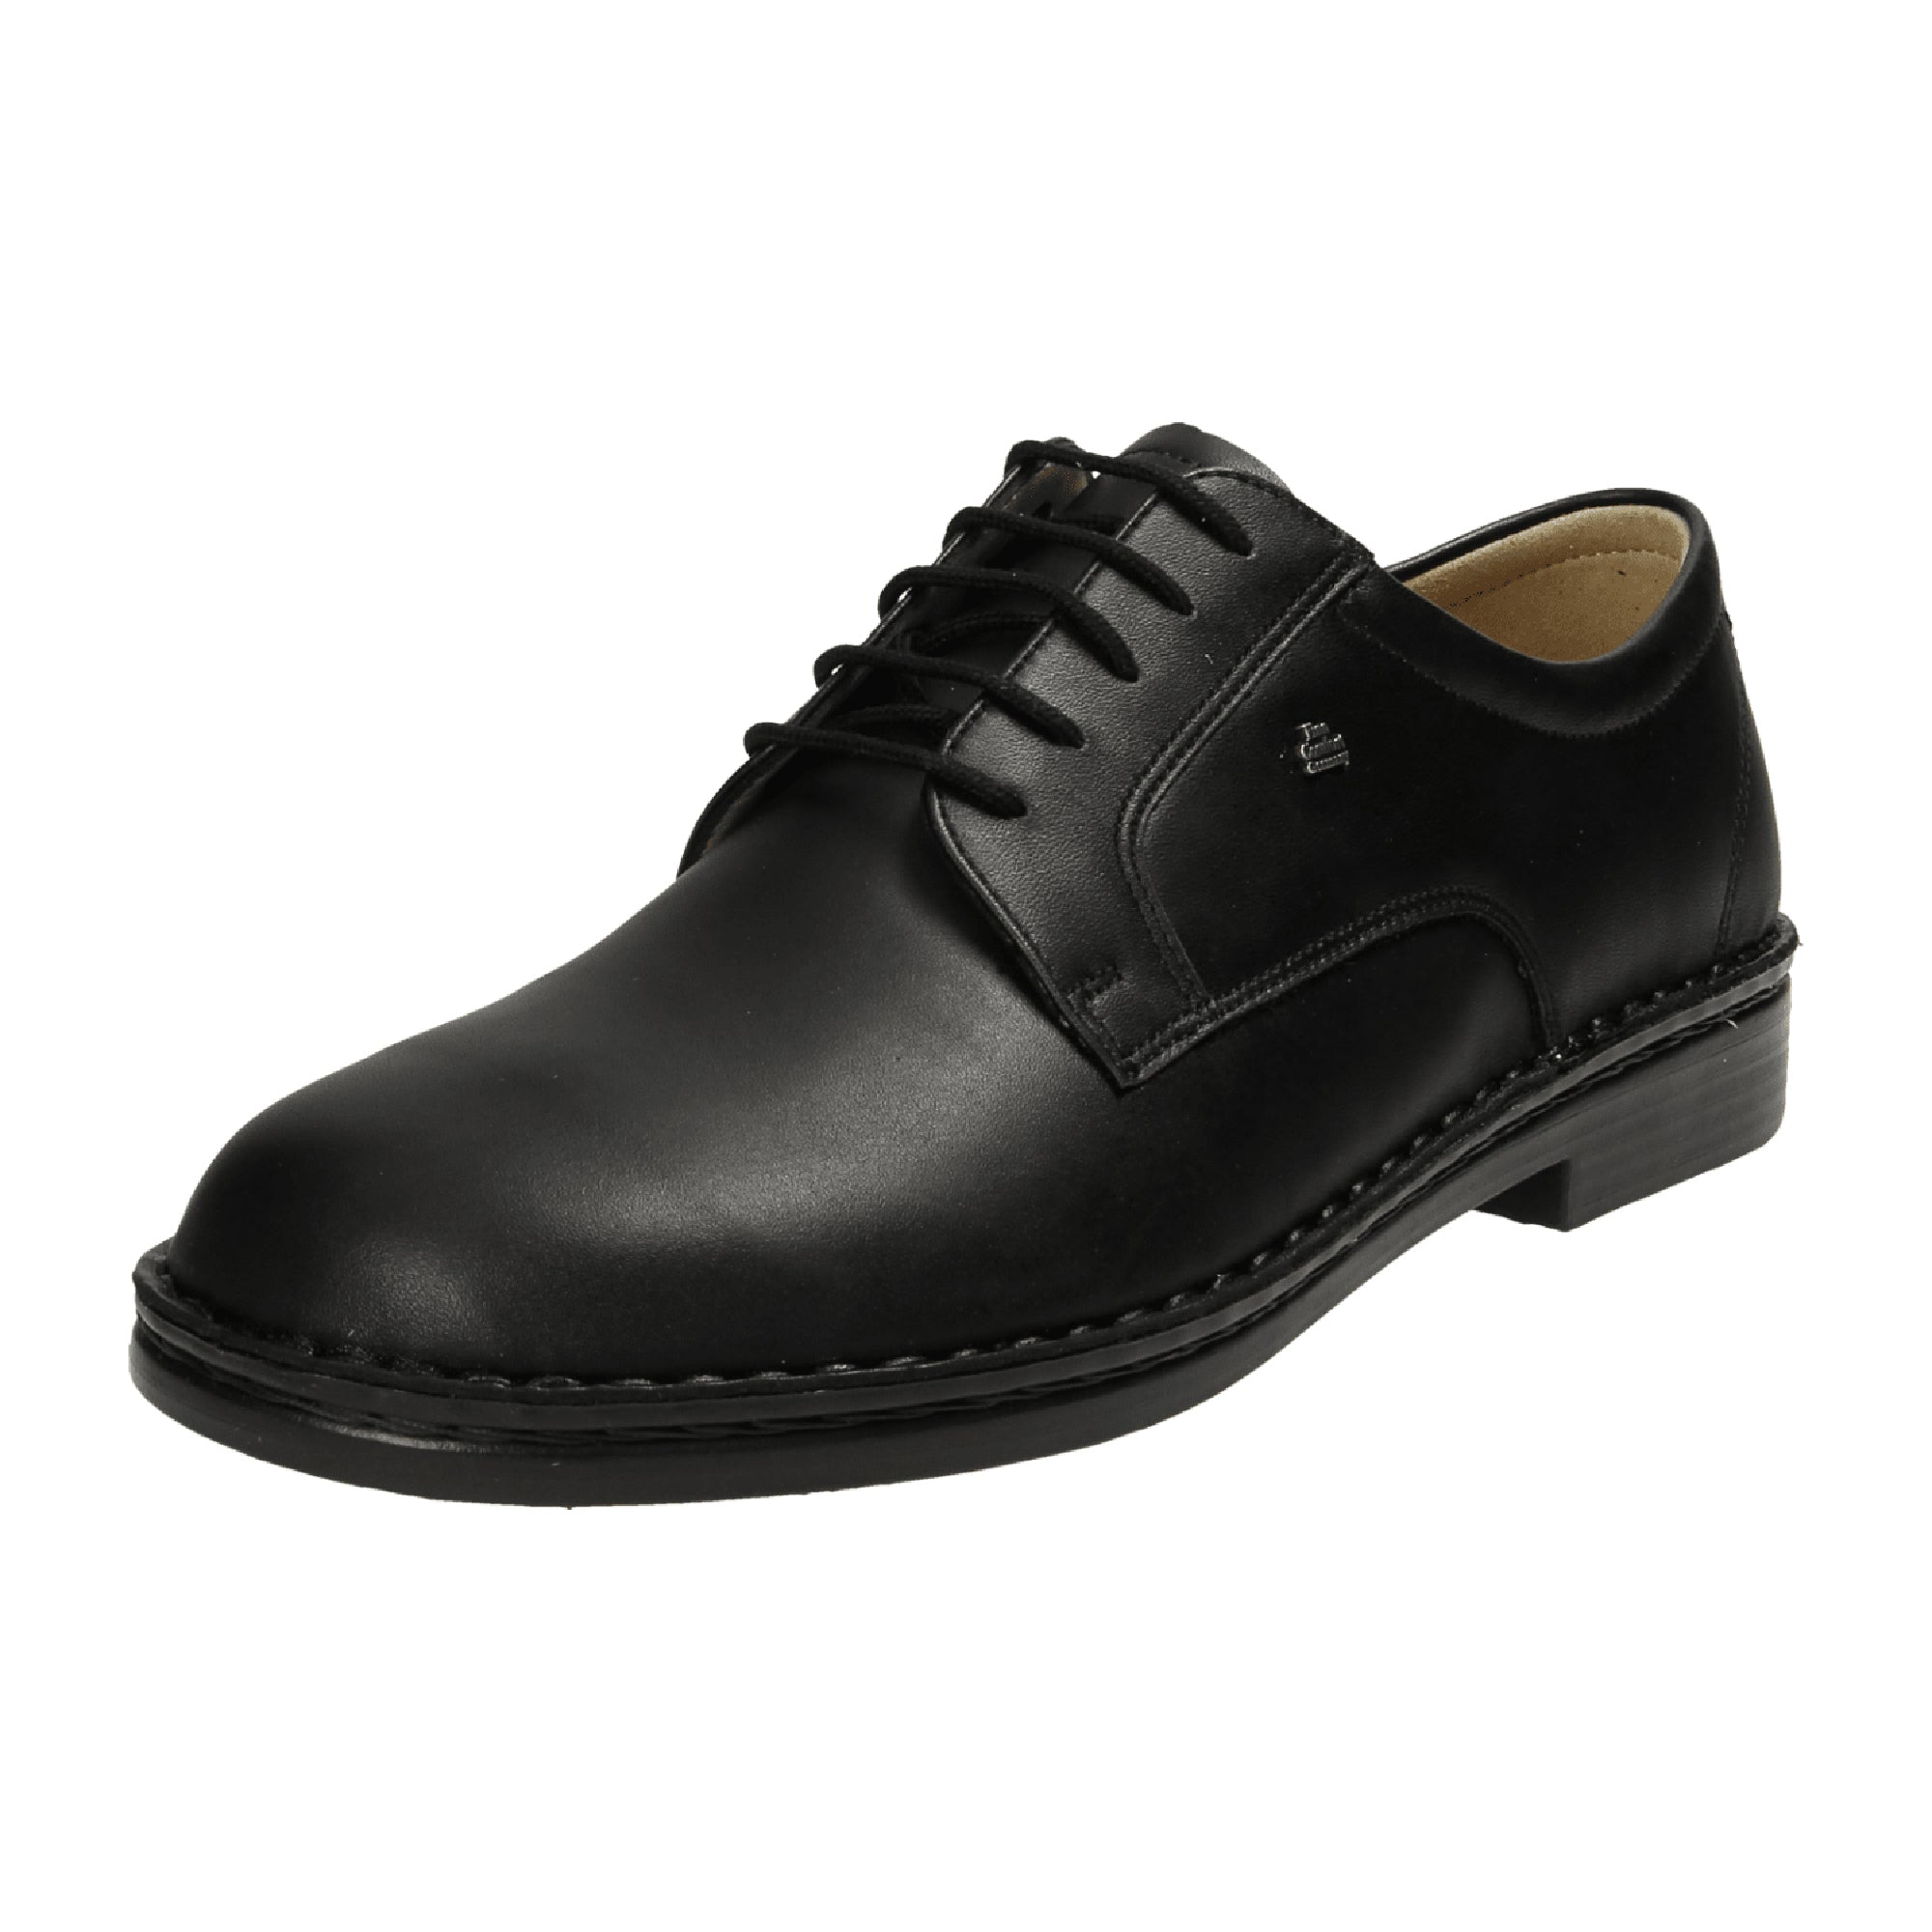 Finn Comfort Milano Men's Black Leather Shoes – Stylish & Durable